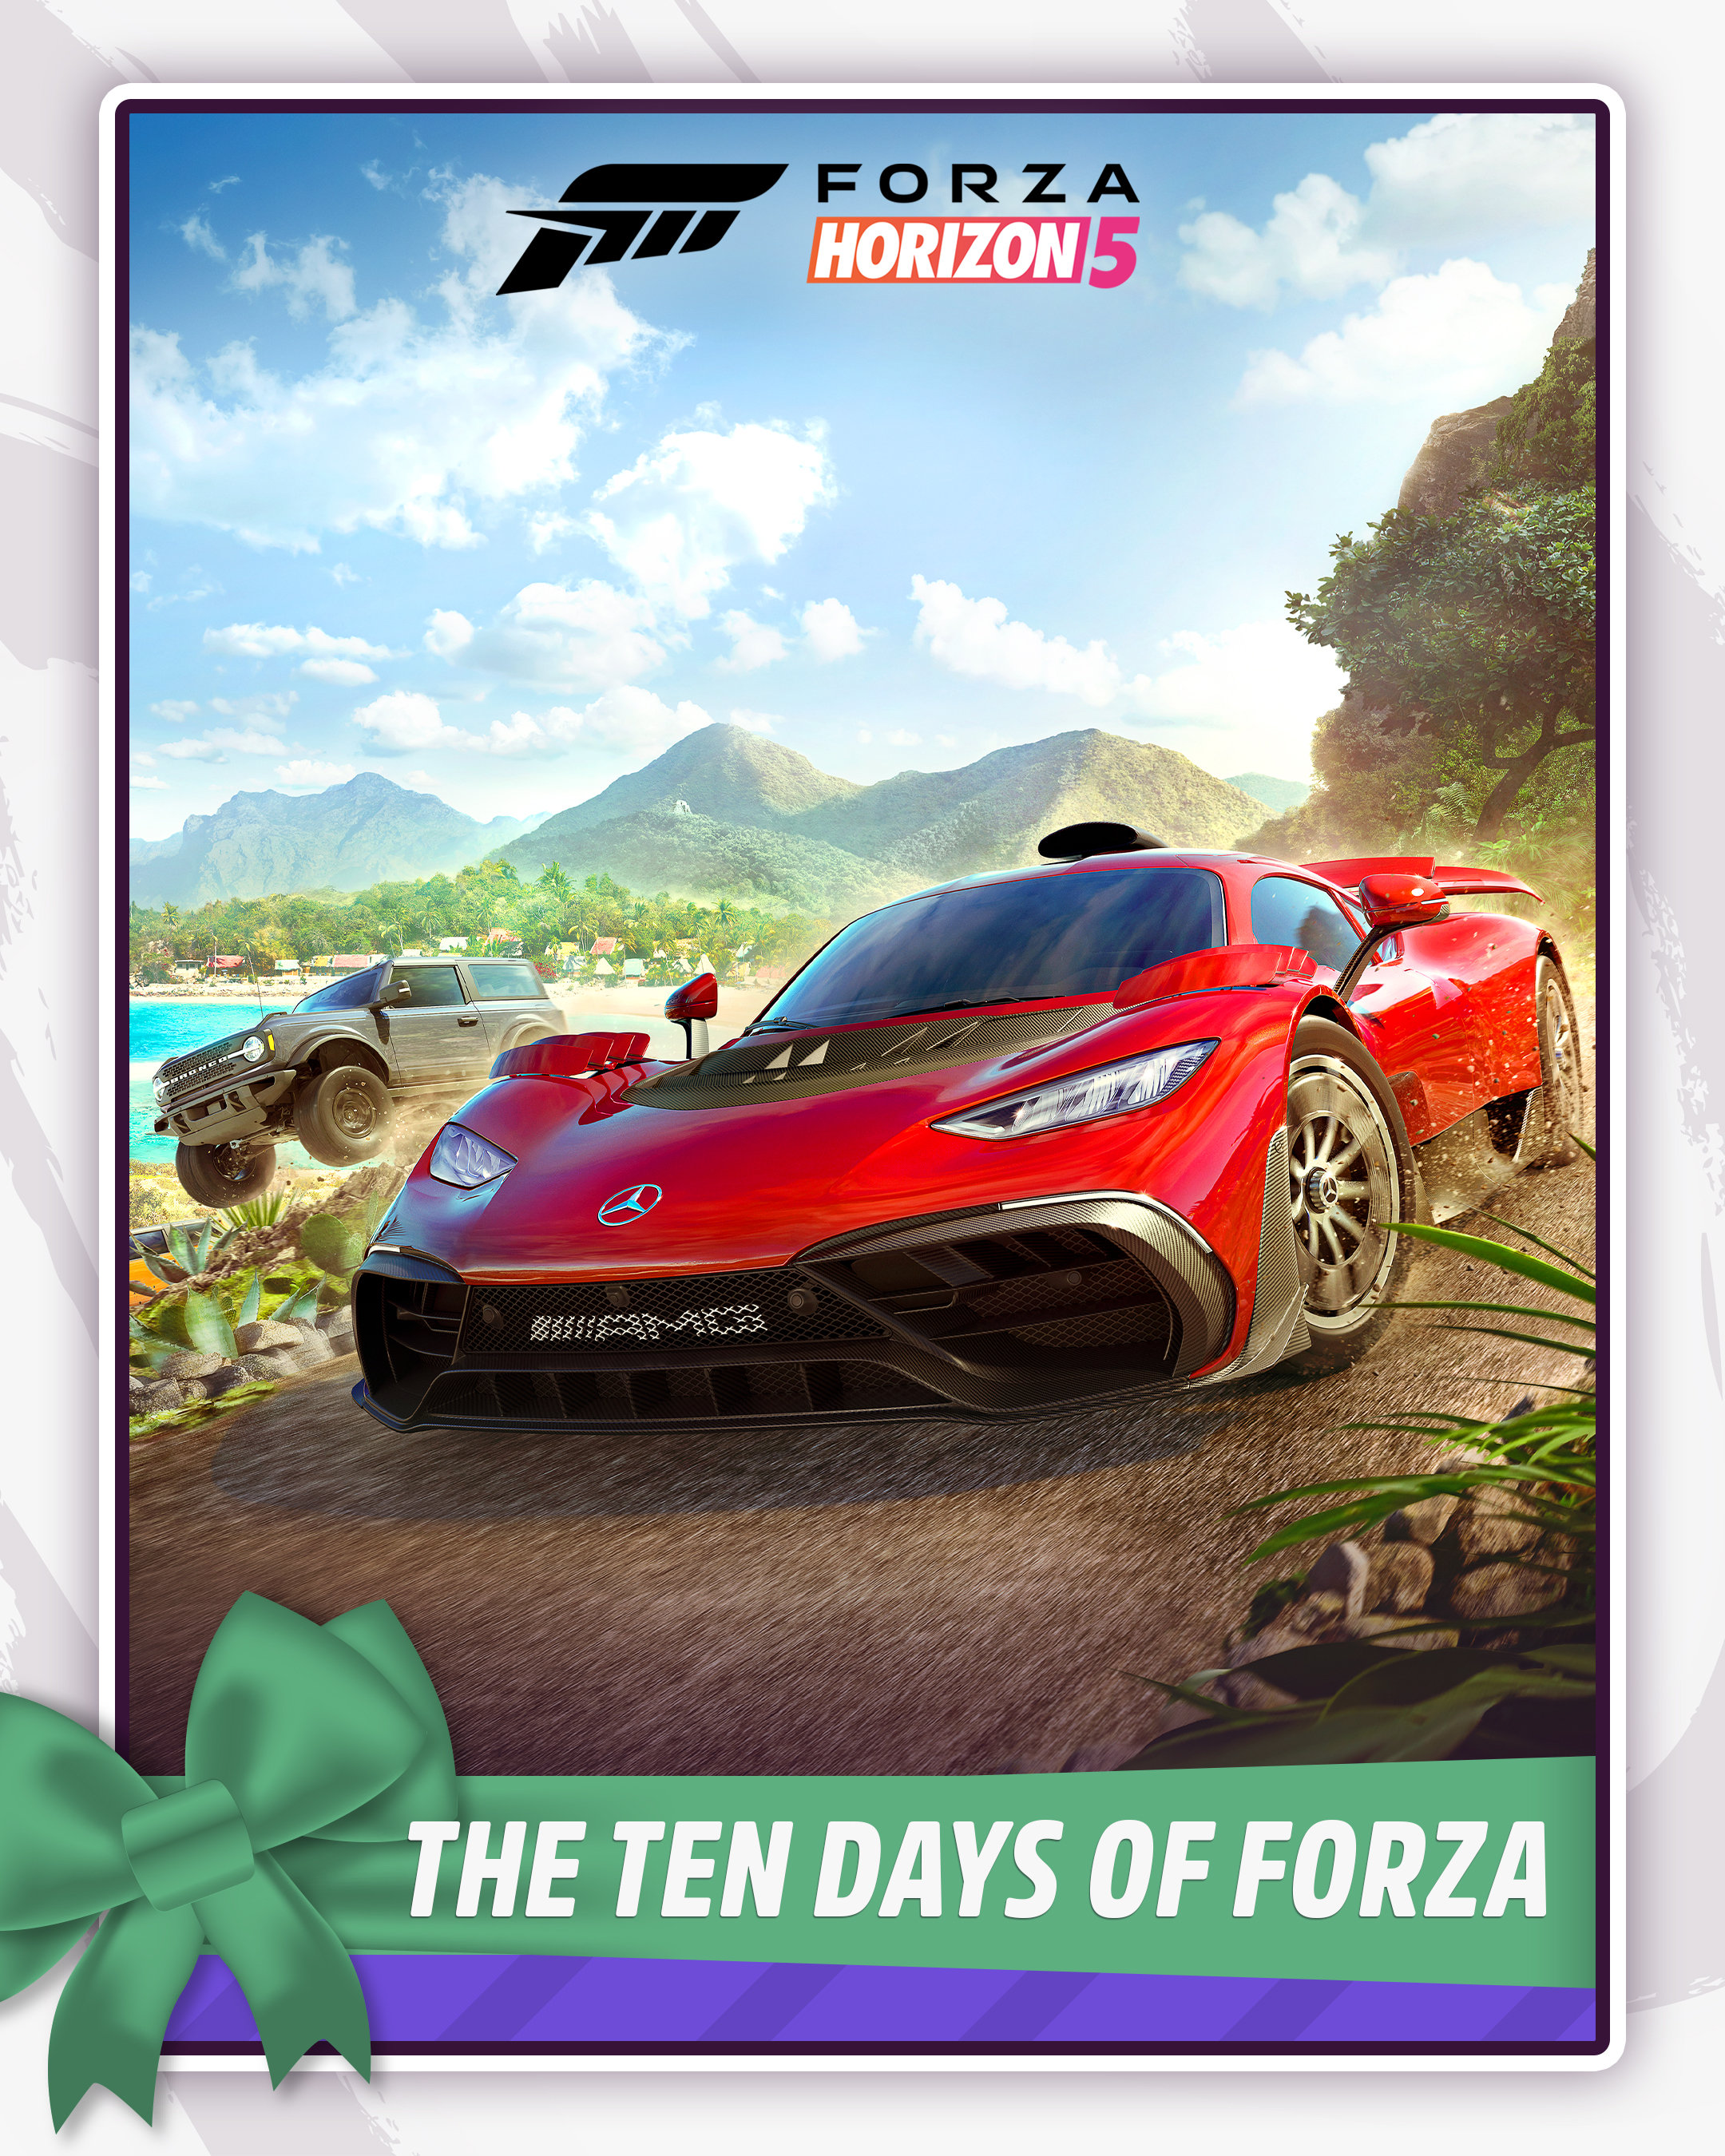 Posts tagged Forza Horizon 3